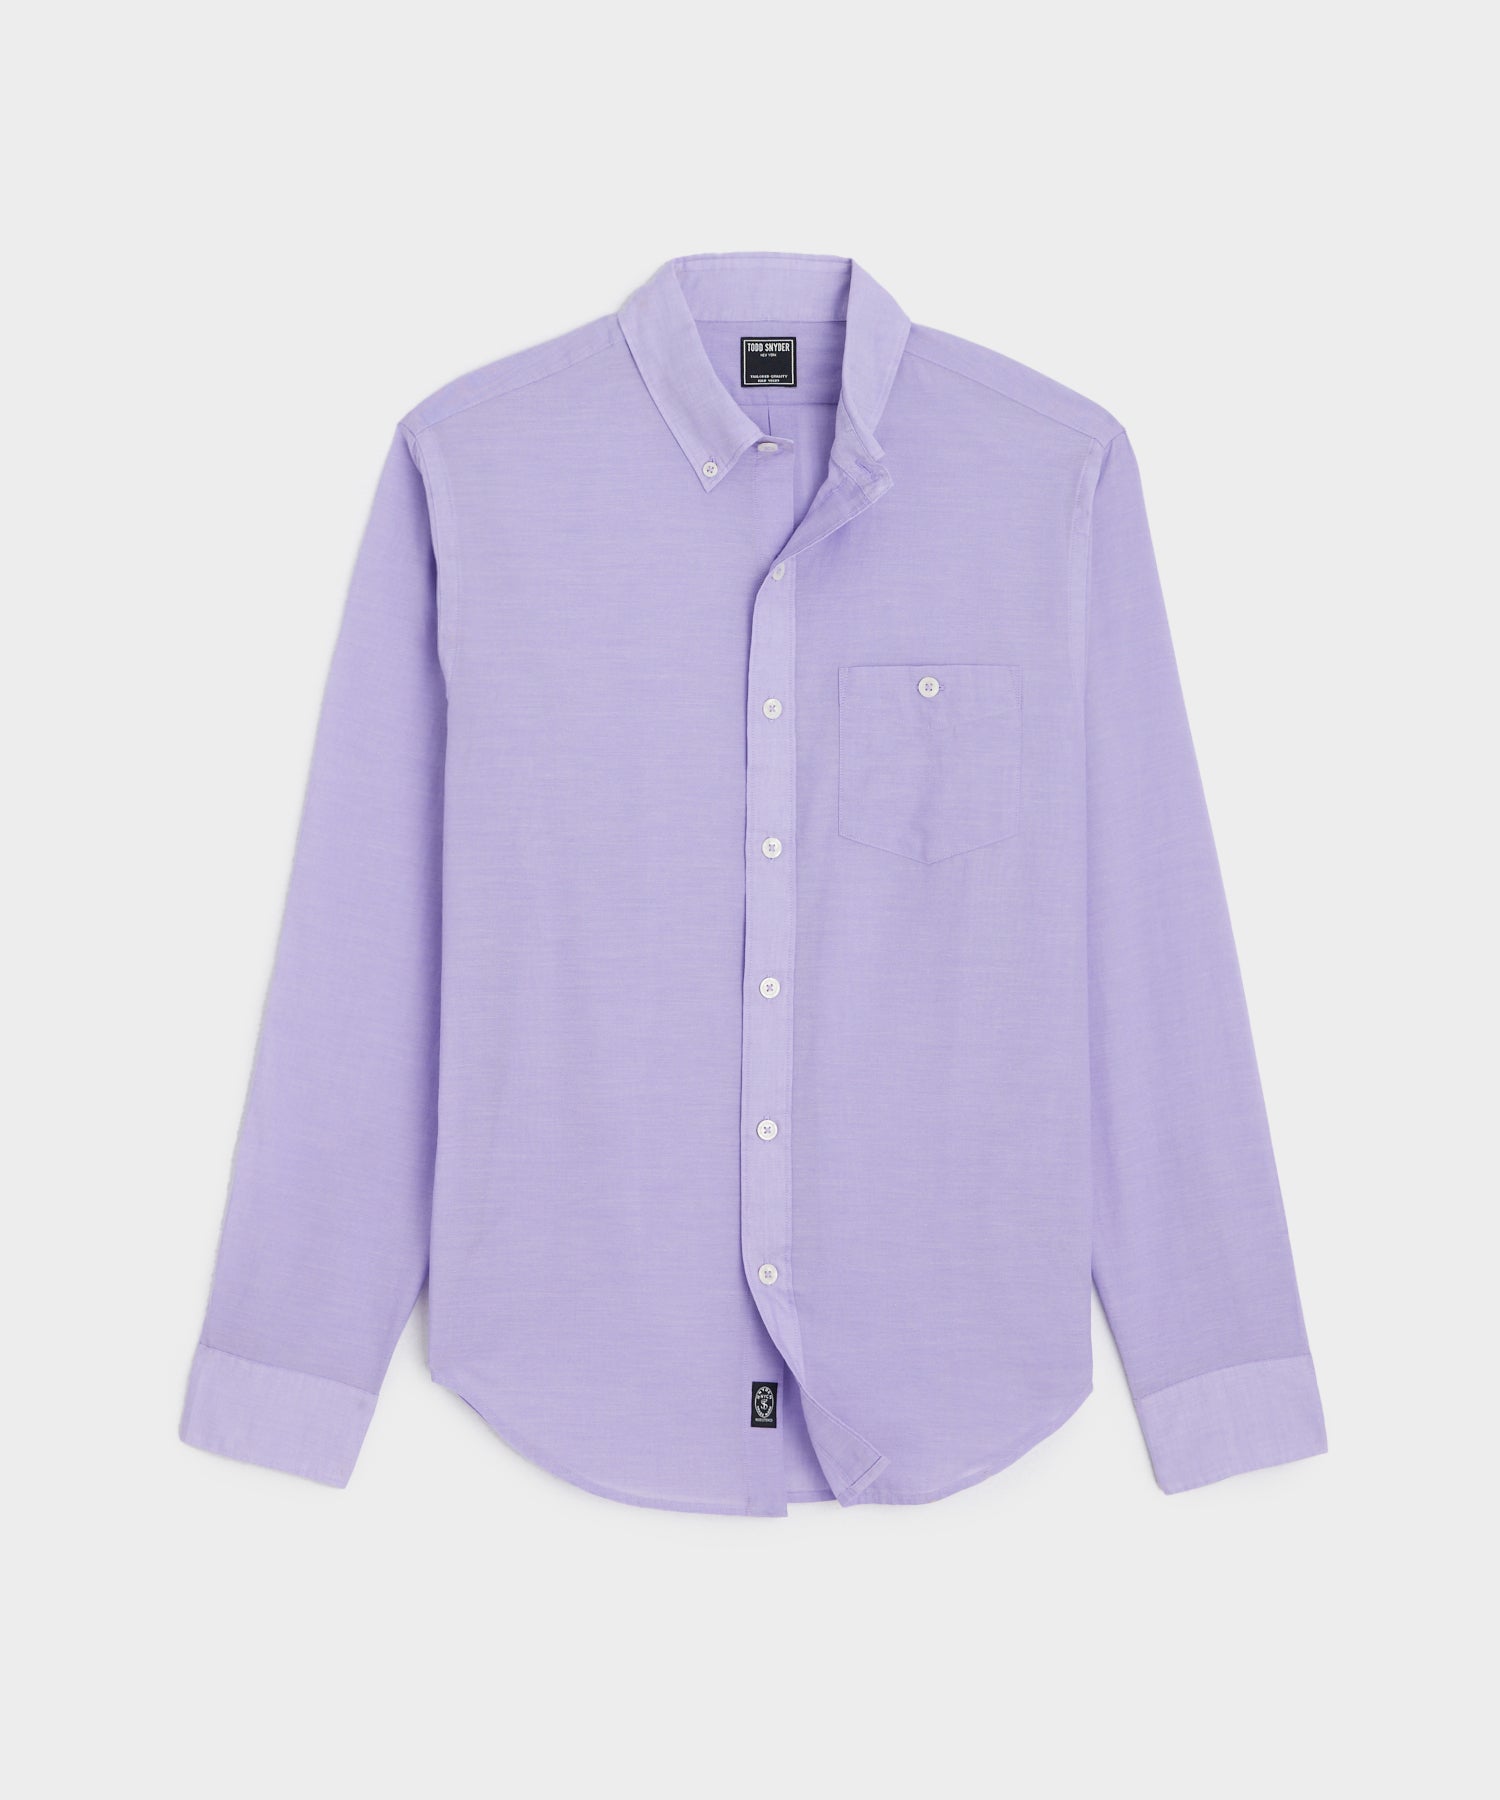 Slim Fit Summerweight Favorite Shirt in Lavender